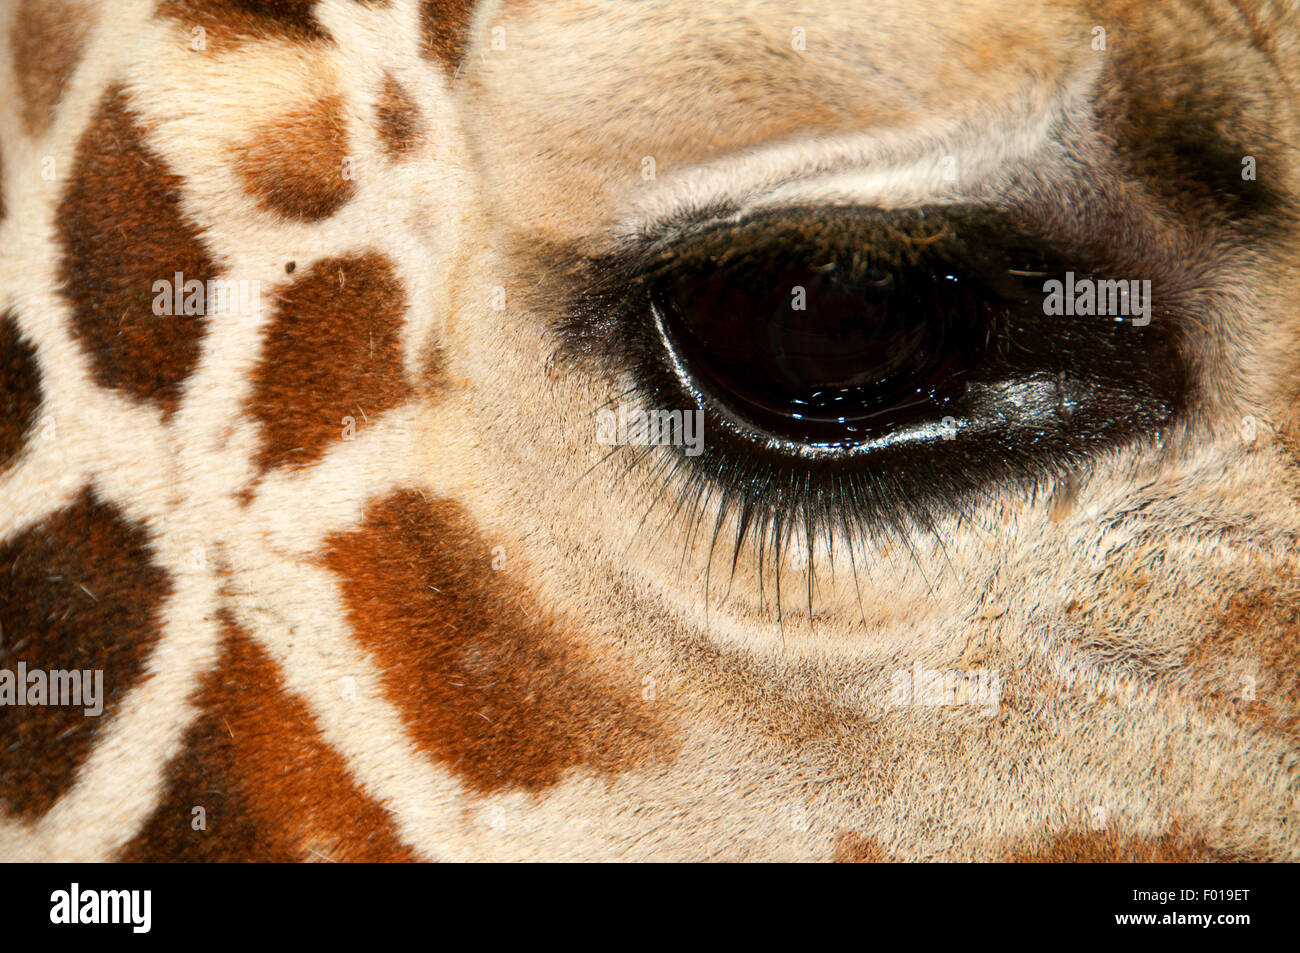 giraffe eyes close up